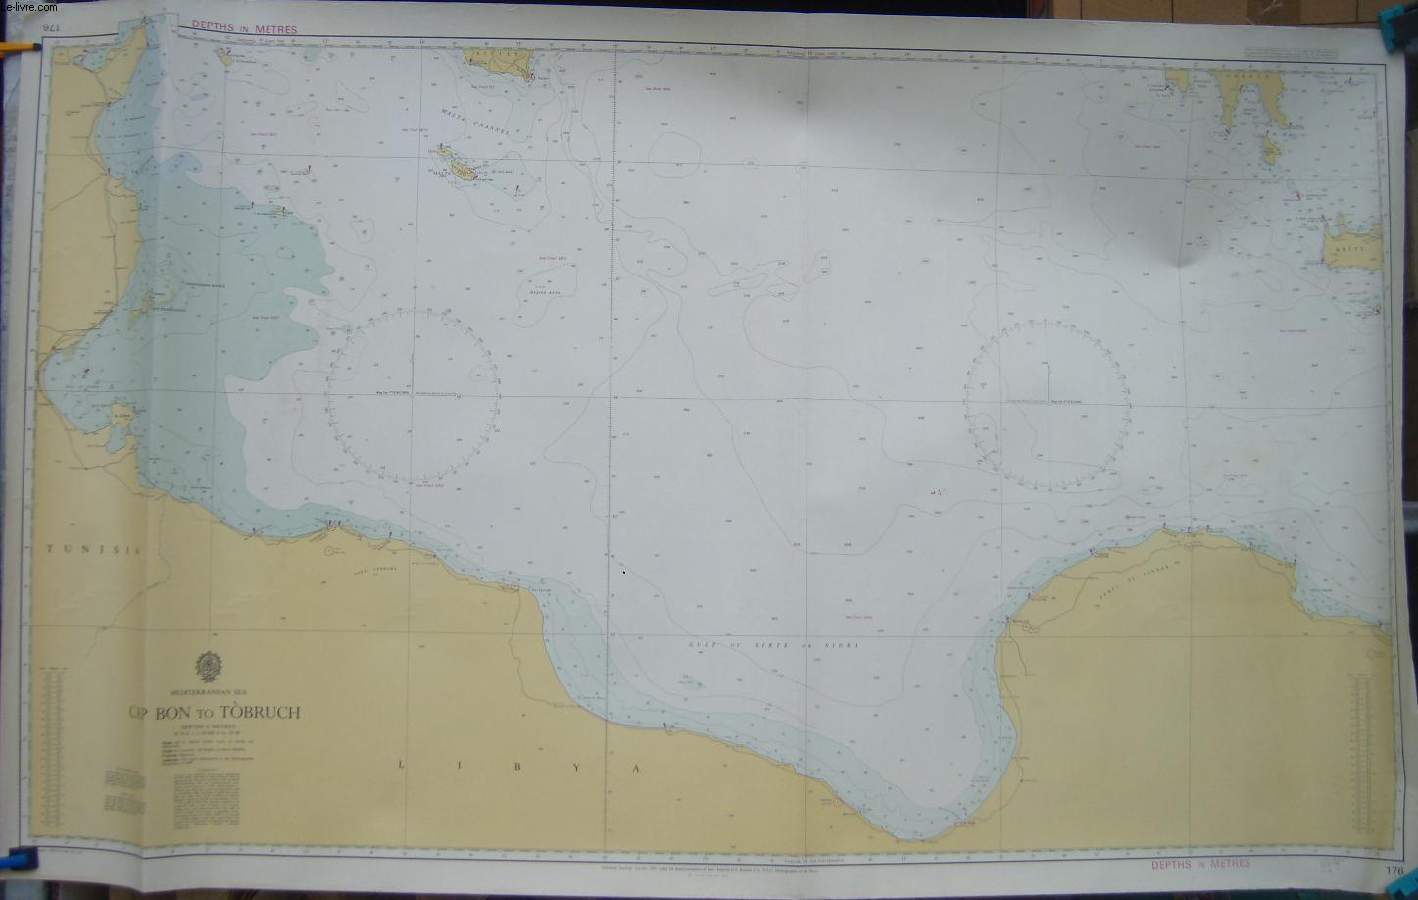 1 CARTE MARITIME EN COULEURS - MEDITERRANEAN SEA - CAP BON TO TOBRUCH - CARTE N176